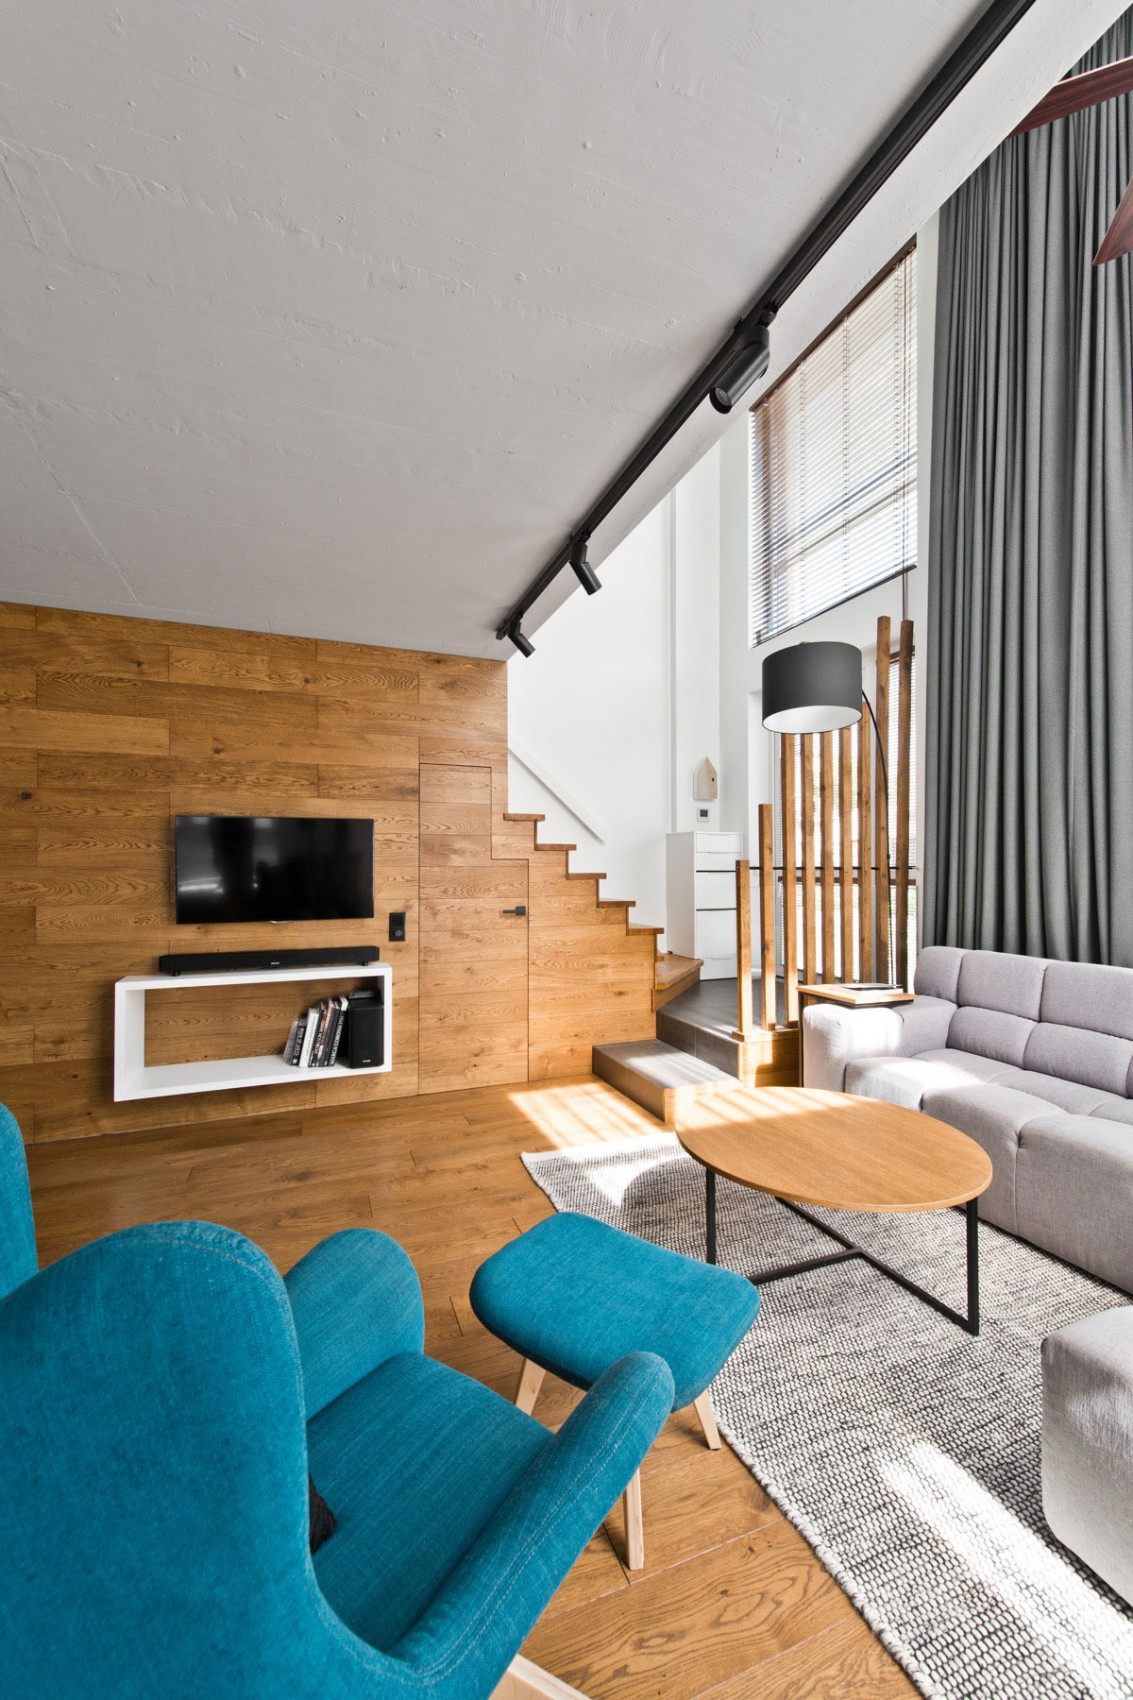 Scandinavian interior design in a beautiful small